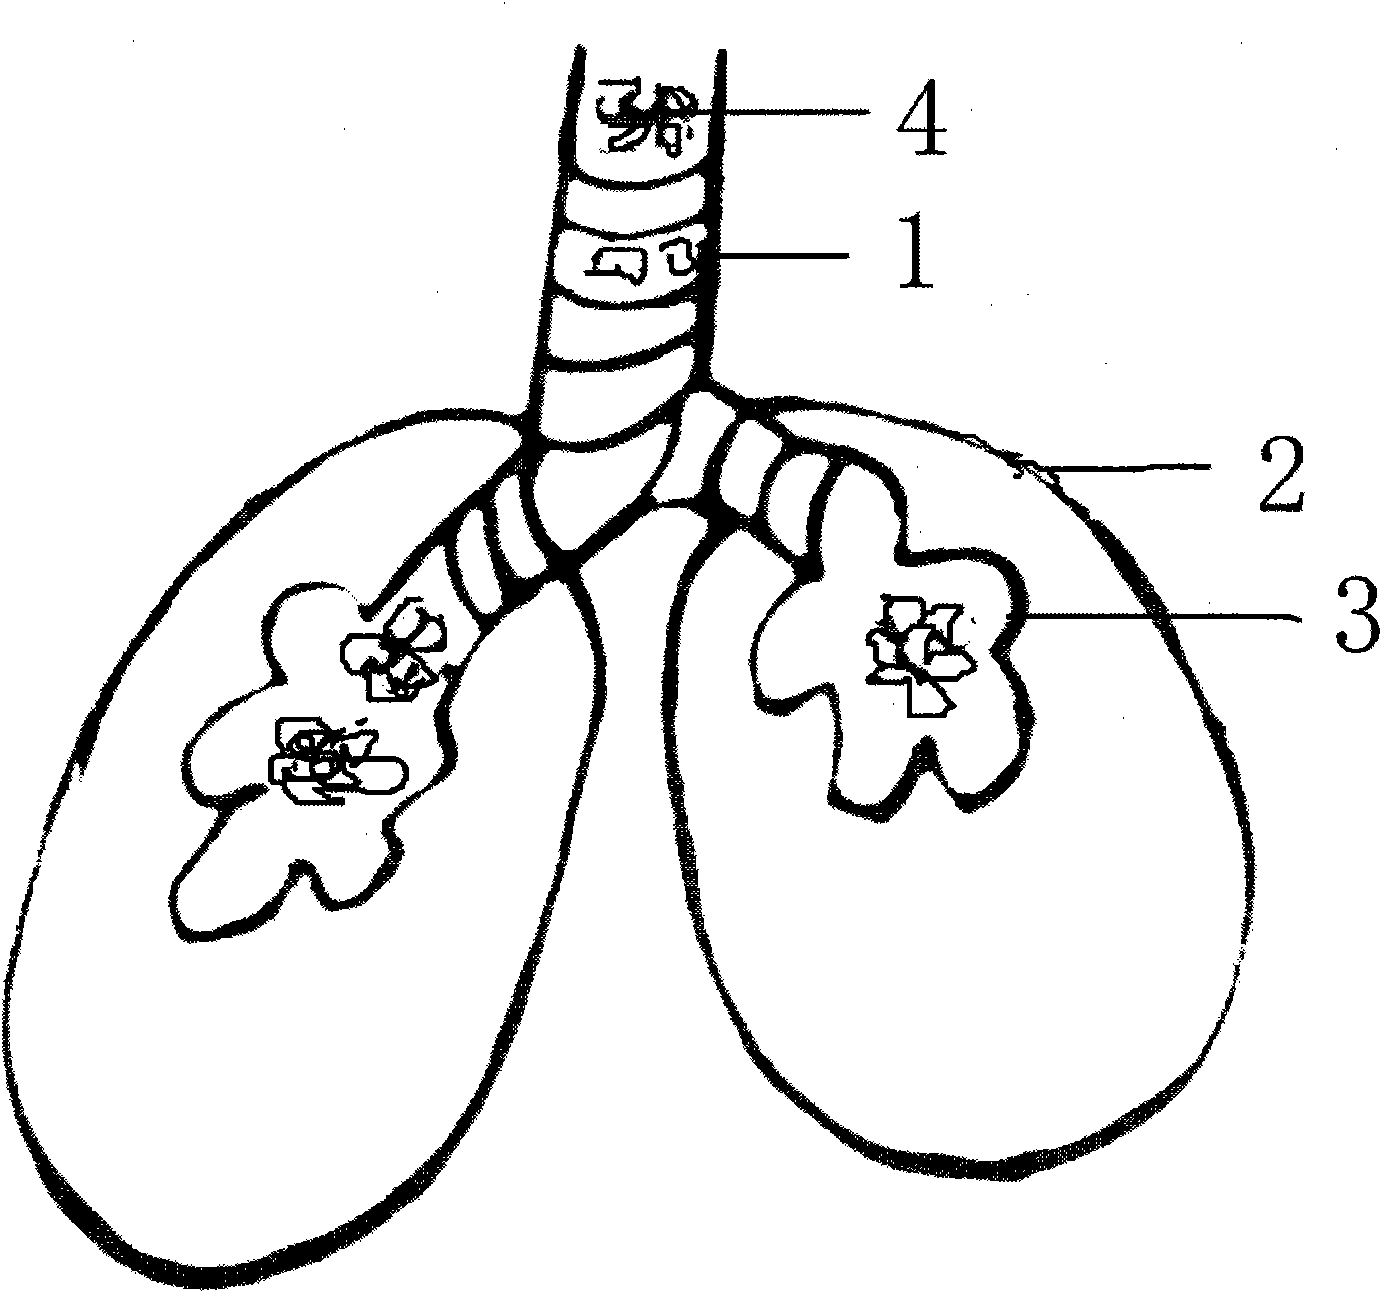 Artificial sputum suction model